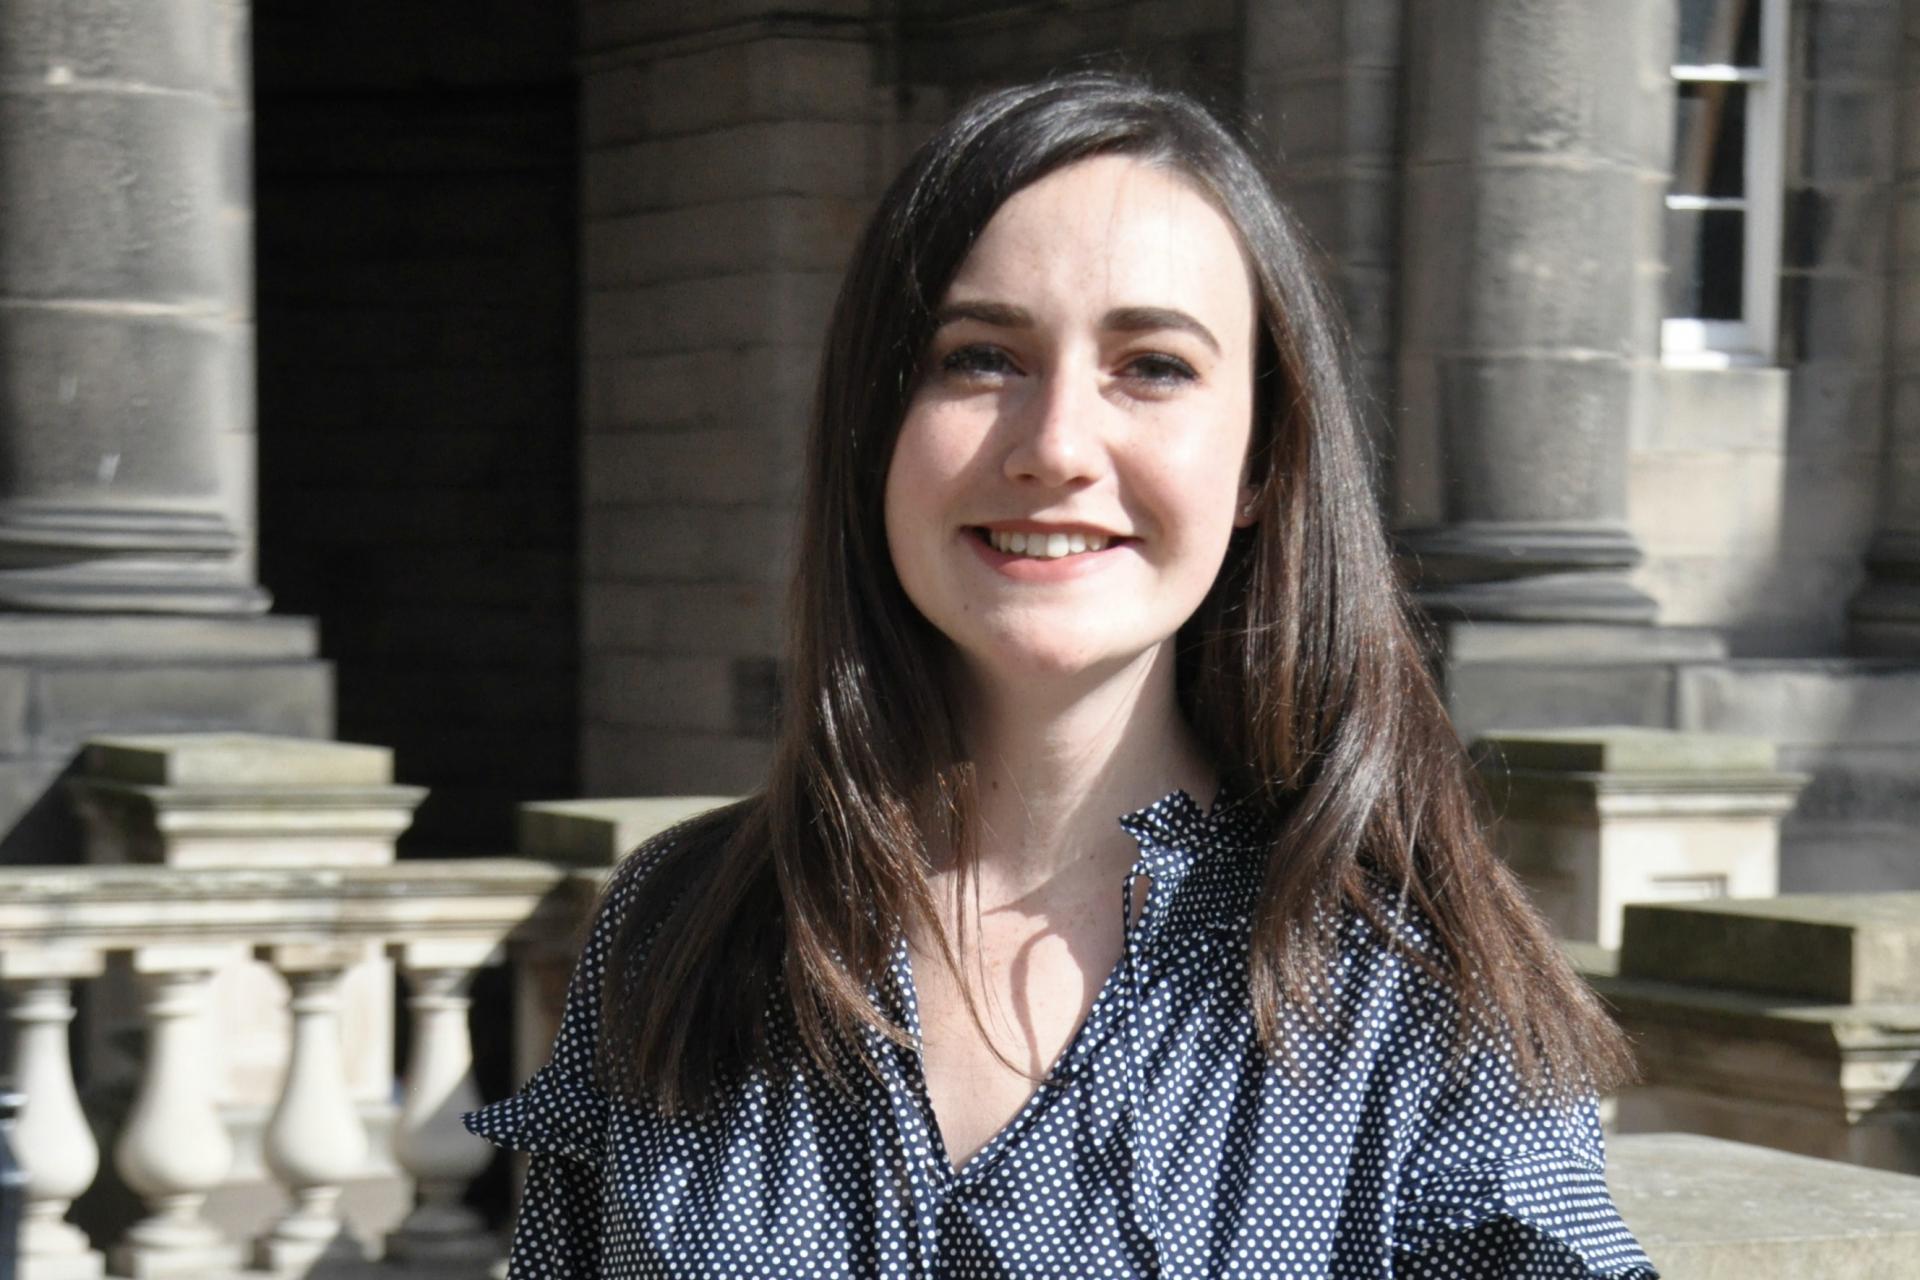 Top LLB graduate Iona Bonaventura reflects on experience at Edinburgh Law School